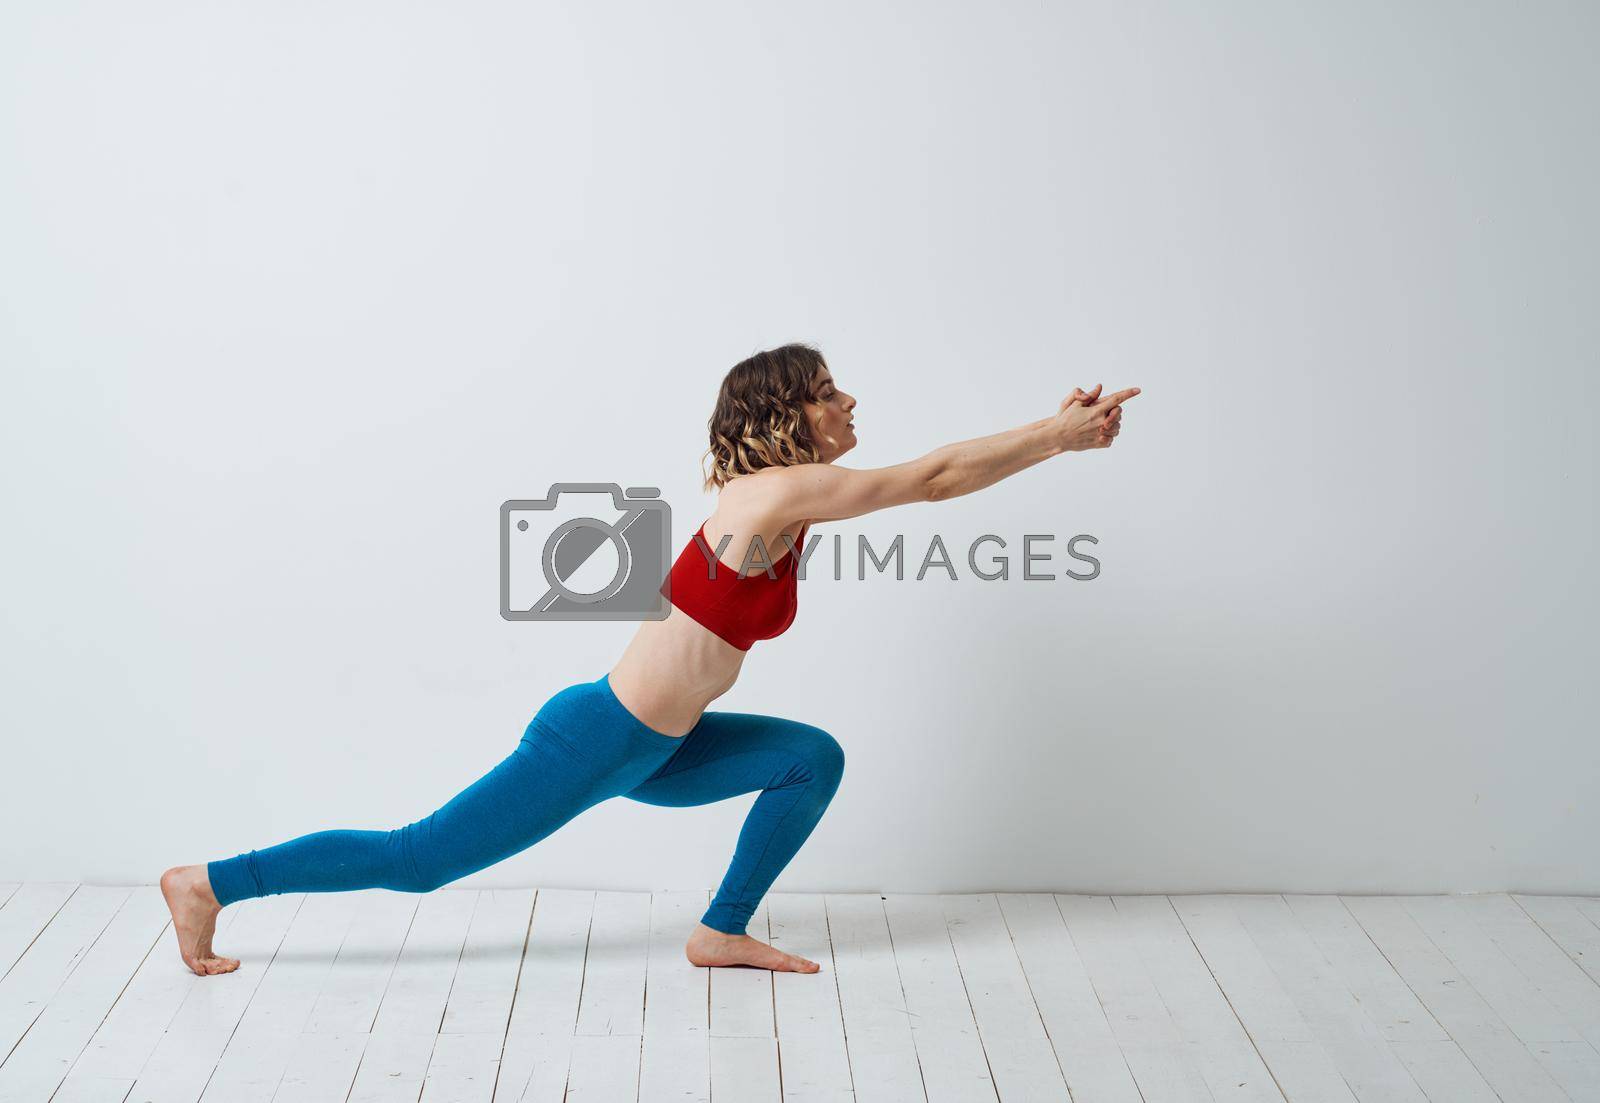 Royalty free image of Woman doing gymnastics exercises yoga asana sportswear by SHOTPRIME